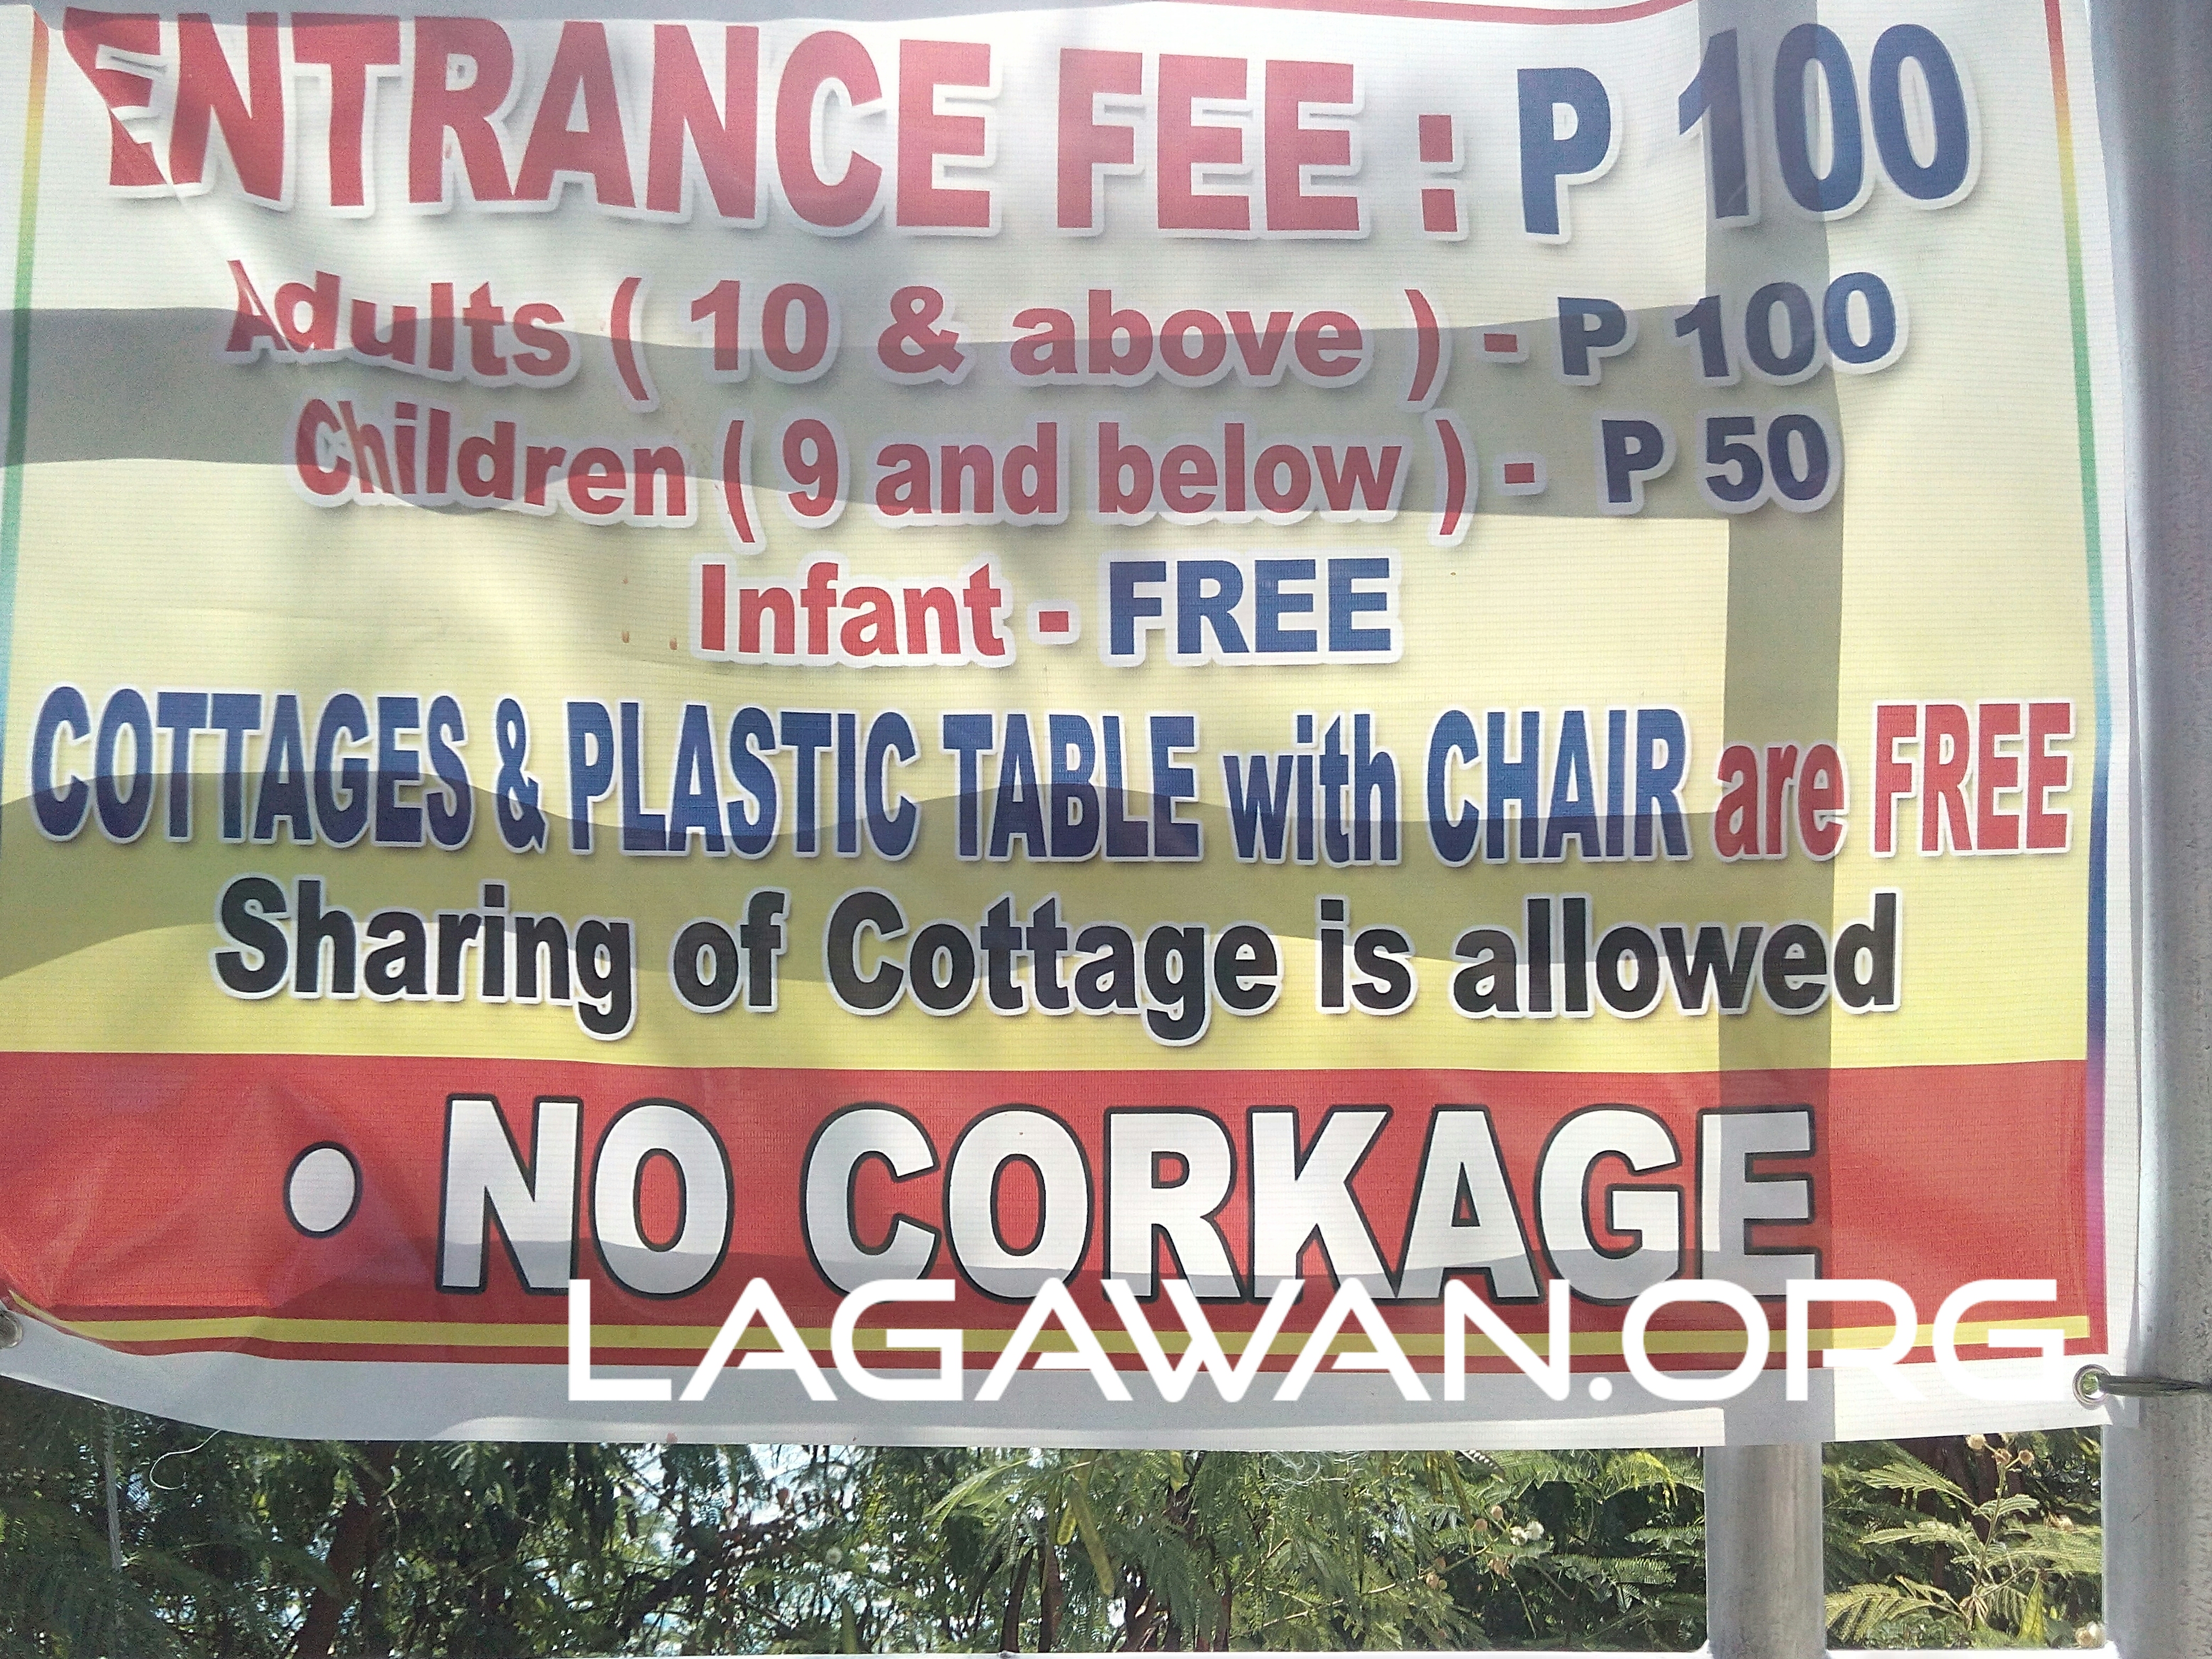 Cangcua-ay Private Resort Entrance Fee